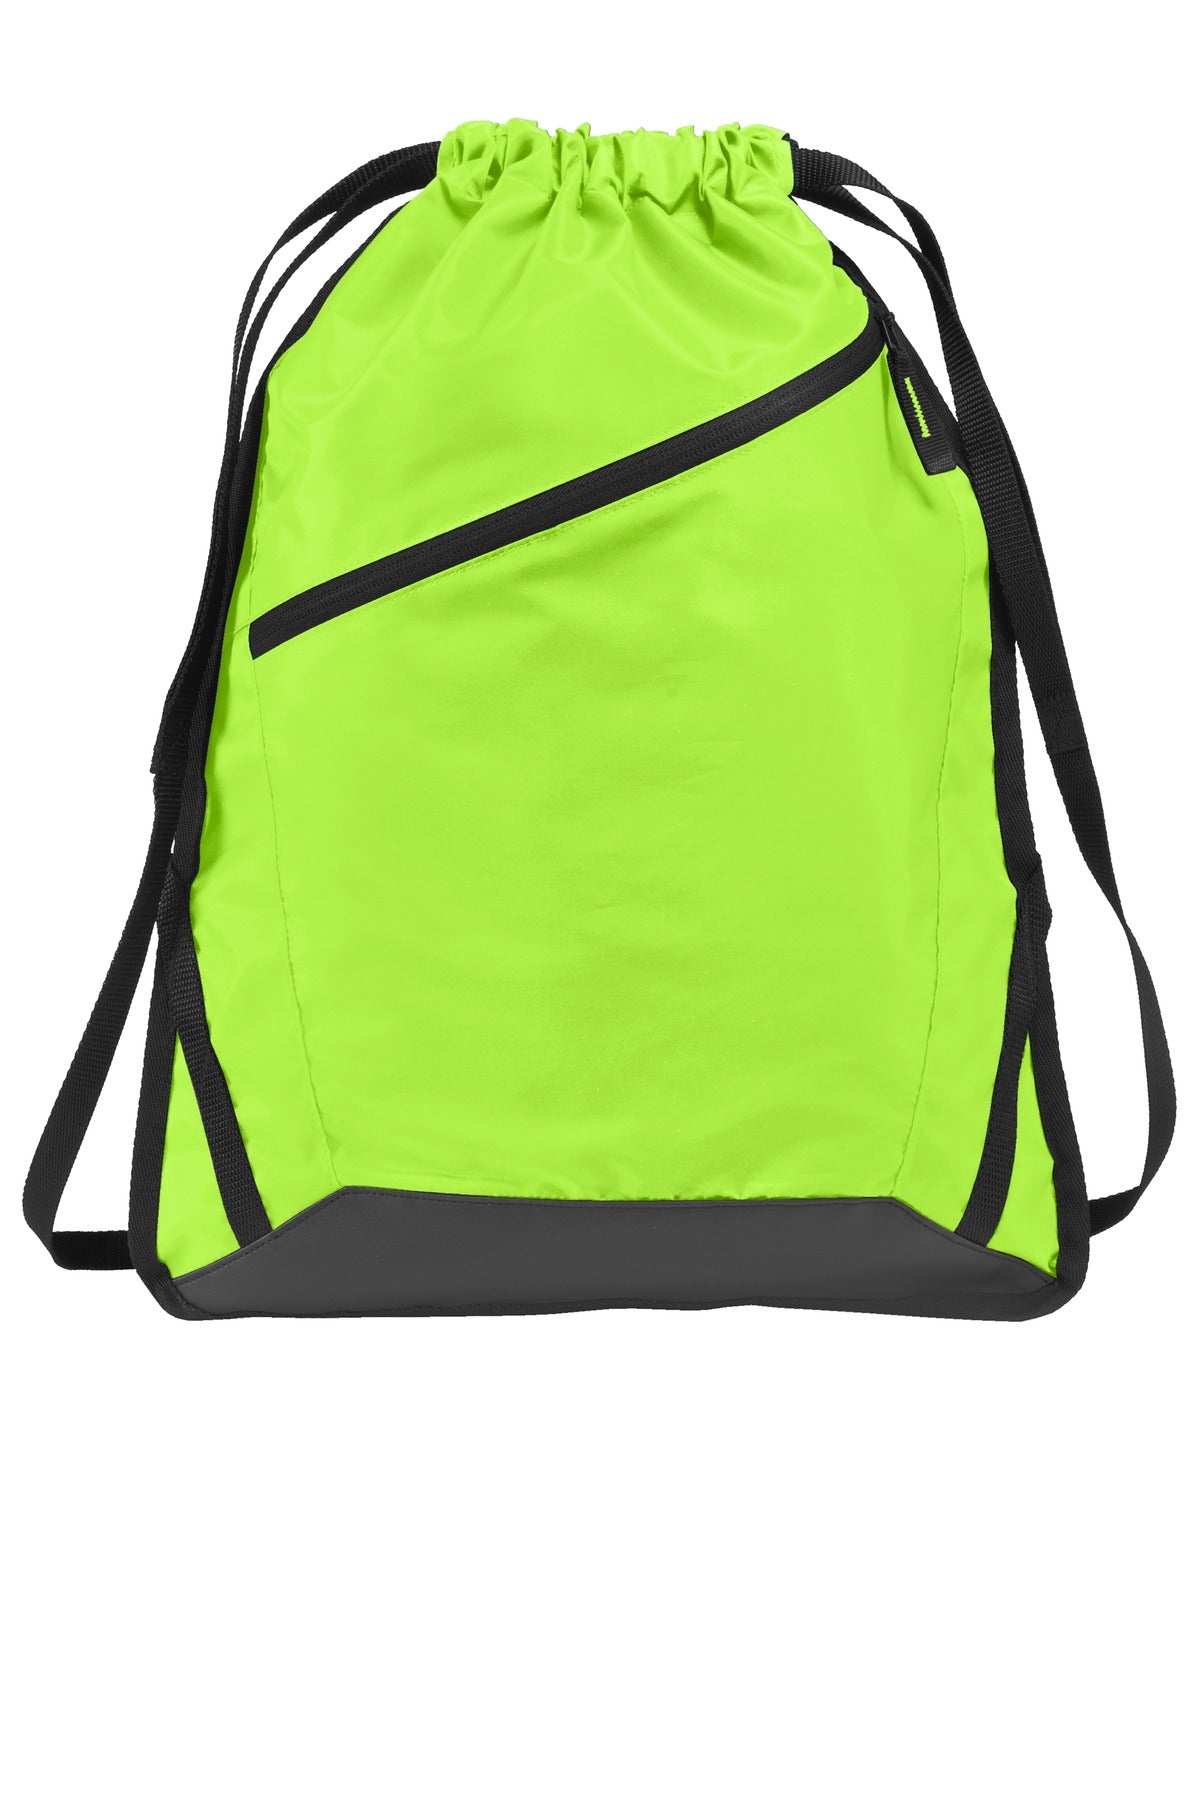 Bags Lime Shock/ Black OSFA Port Authority